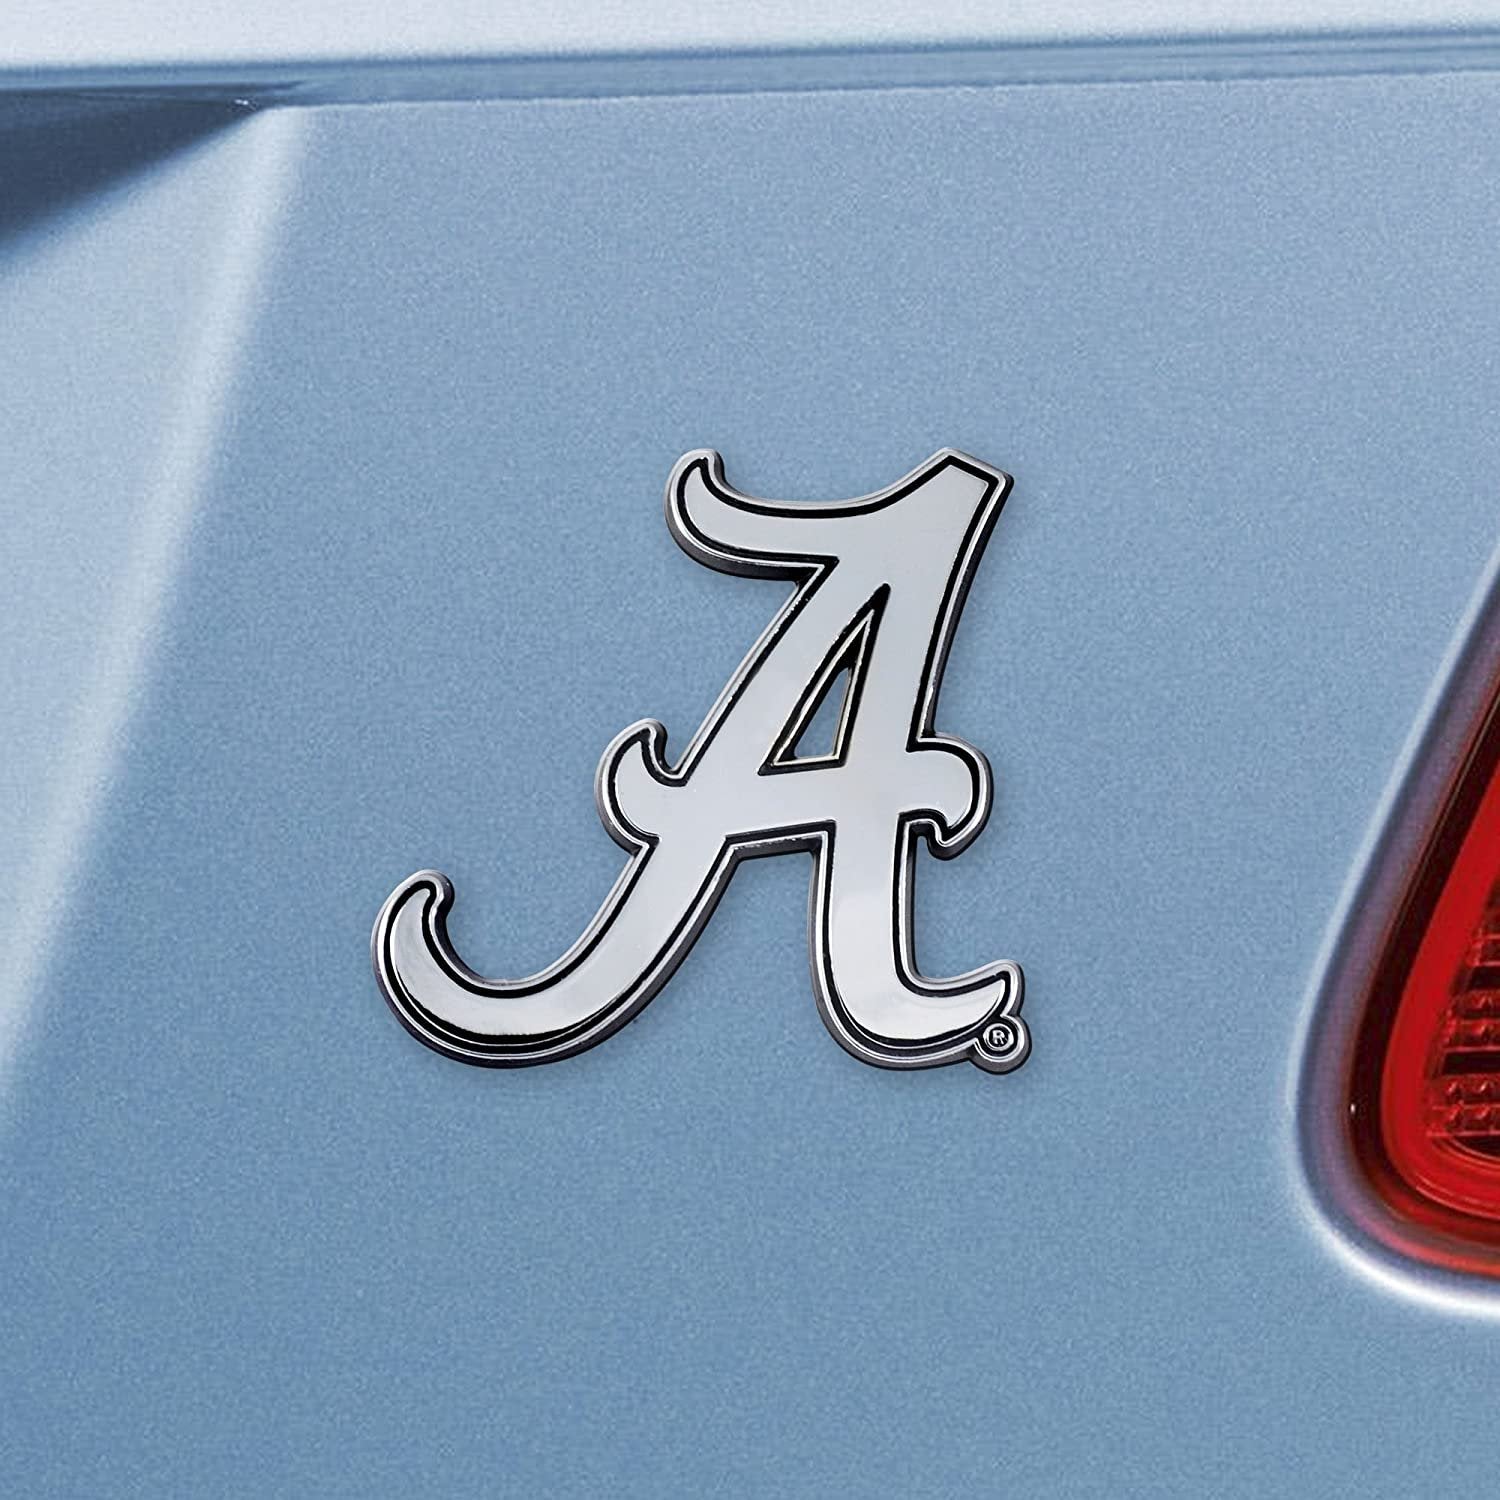 University of Alabama Crimson Tide Auto Emblem Solid Metal Chrome Raised Decal Adhesive Backing